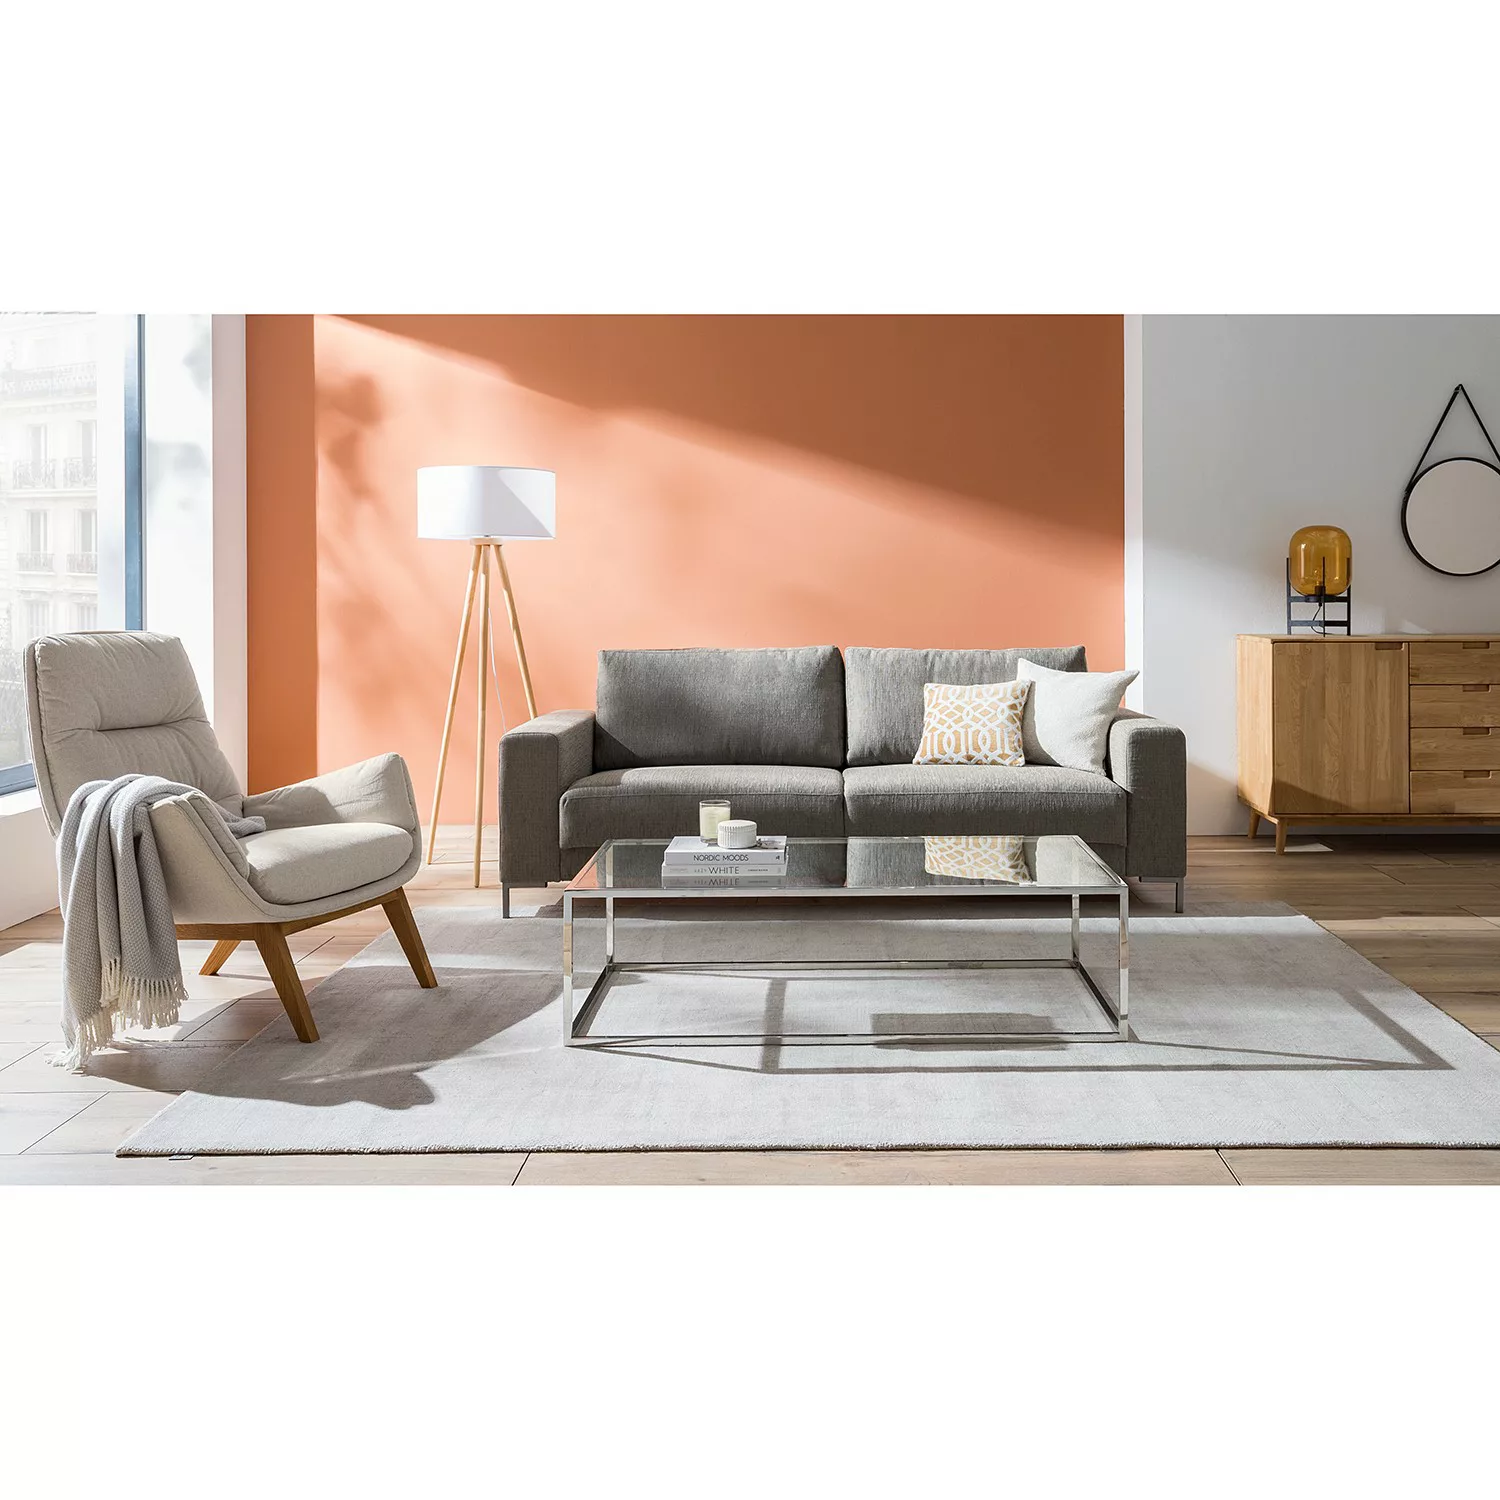 home24 Studio Copenhagen Sessel Garbo I Beige Webstoff 83x95x92 cm (BxHxT) günstig online kaufen